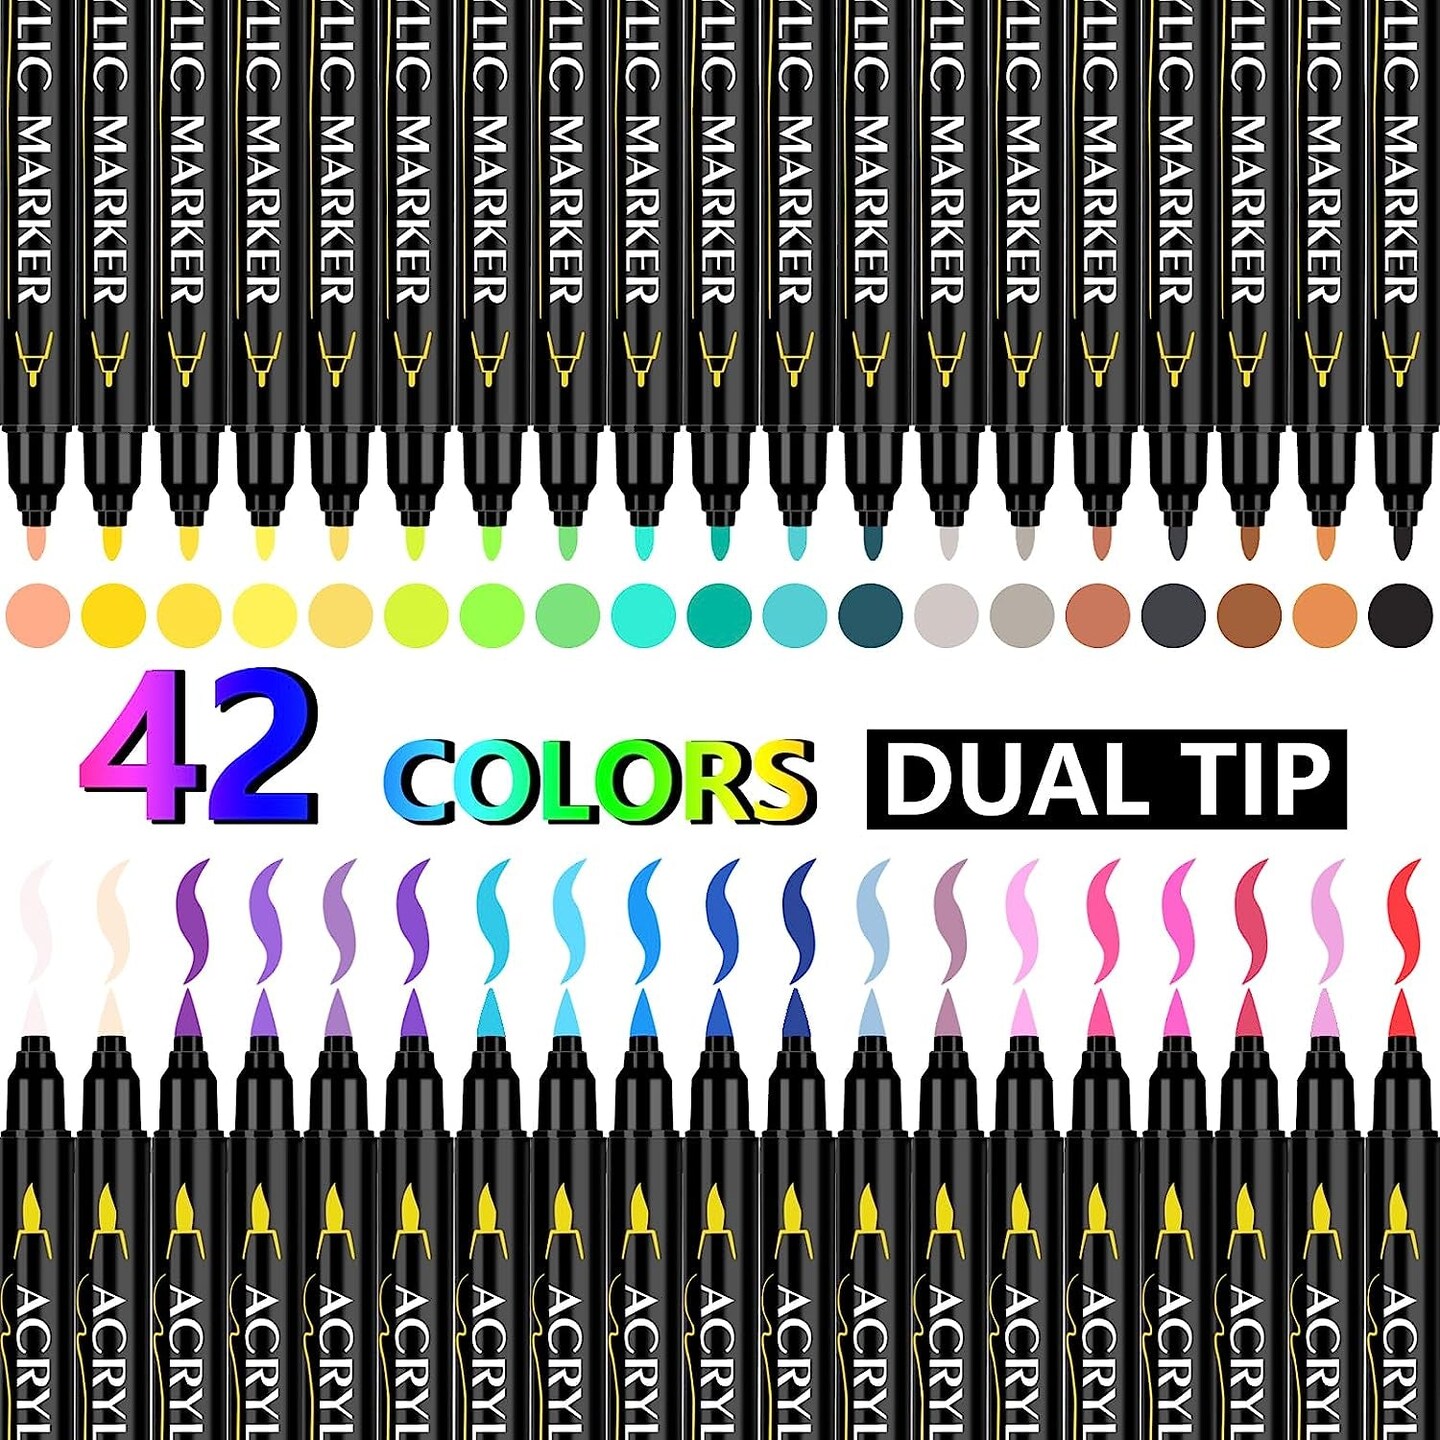  Brush Tip Acrylic Paint Markers Paint Pens Set,Ideal